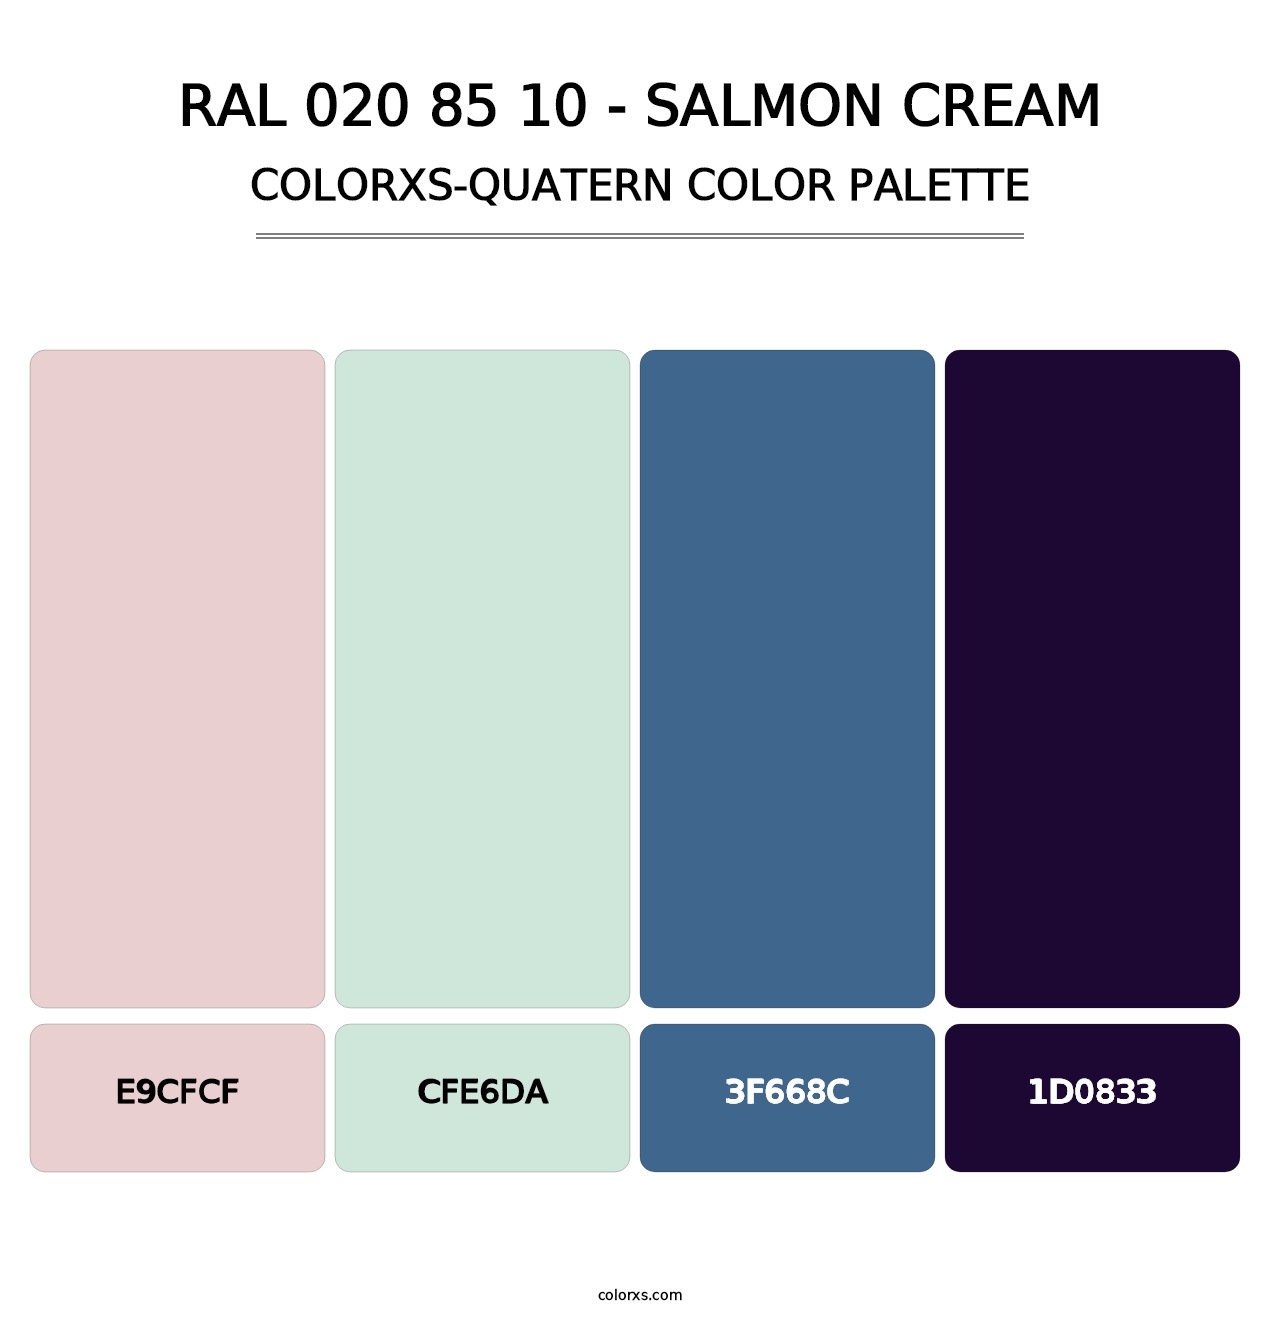 RAL 020 85 10 - Salmon Cream - Colorxs Quatern Palette